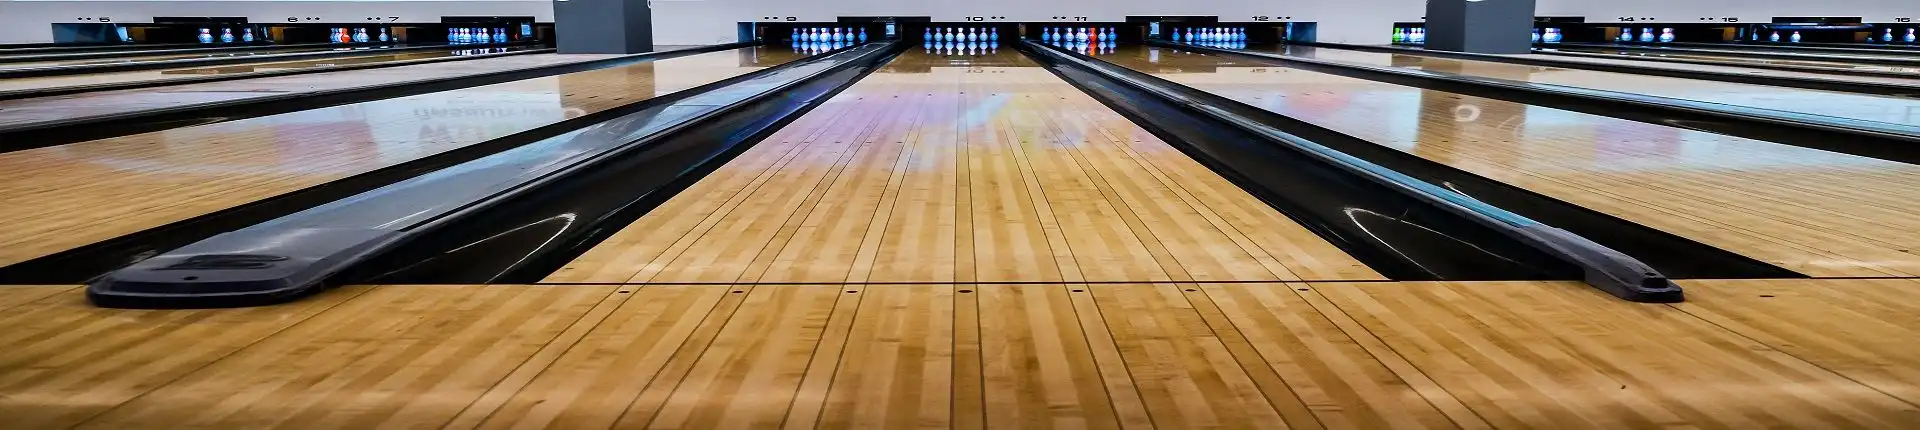 Dubai's Best Bowling Alleys: Striking Up Some Fun